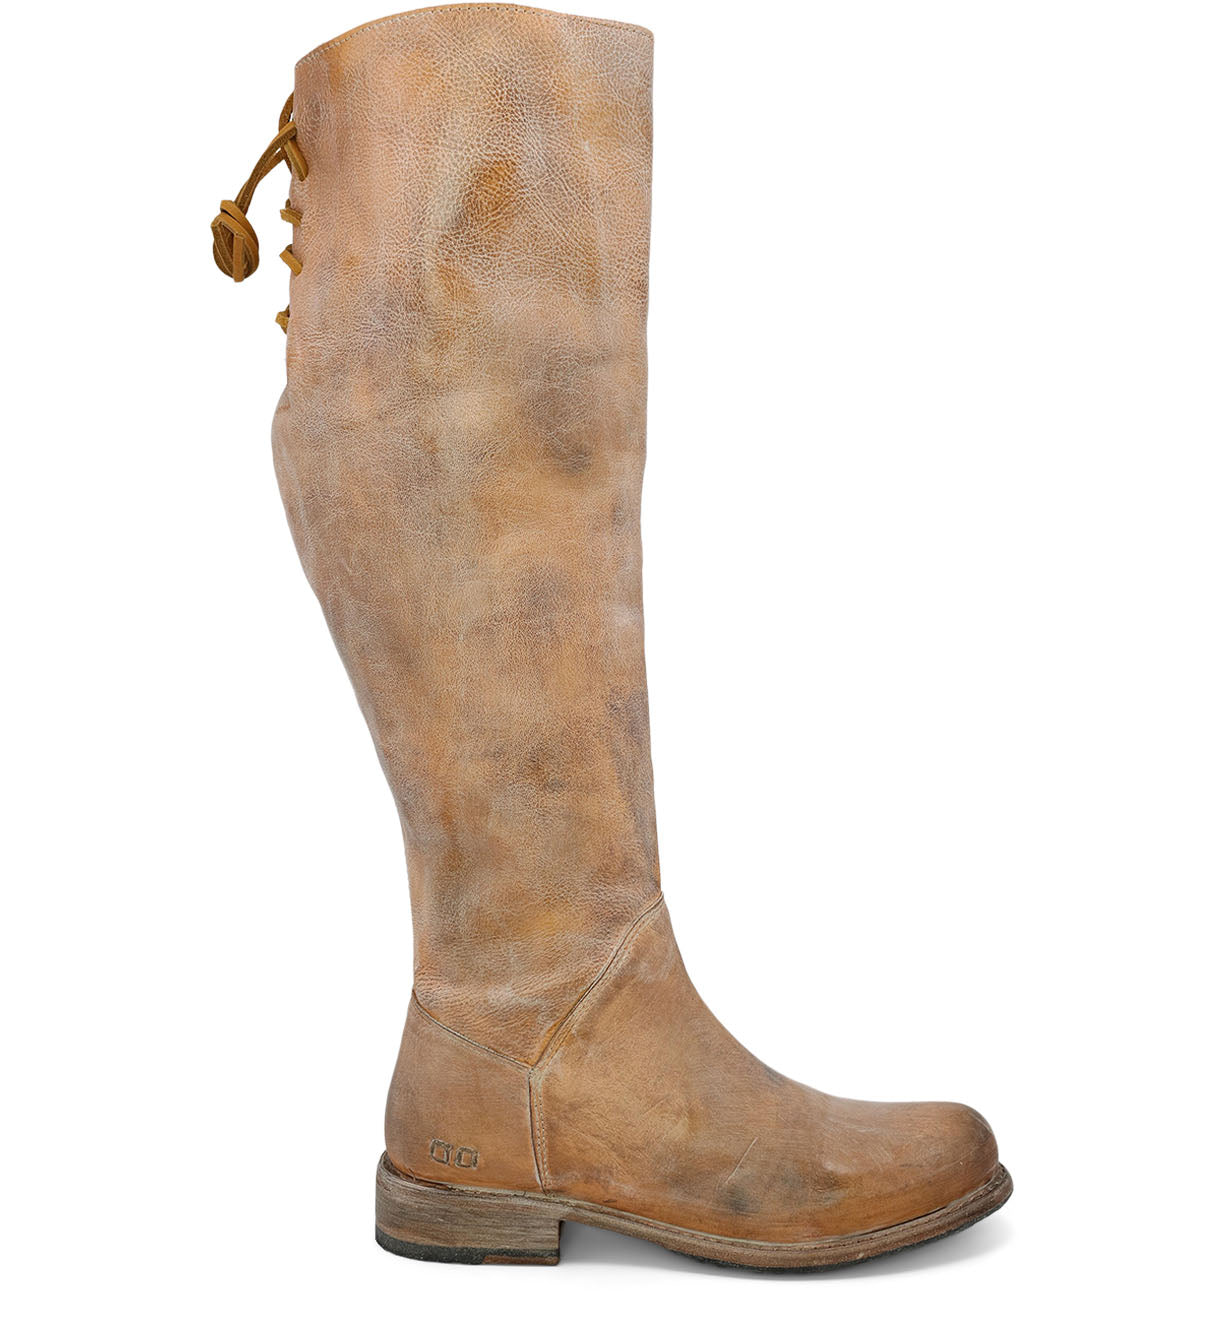 A women's Bed Stu Manchester Wide Calf tan leather knee high boot.